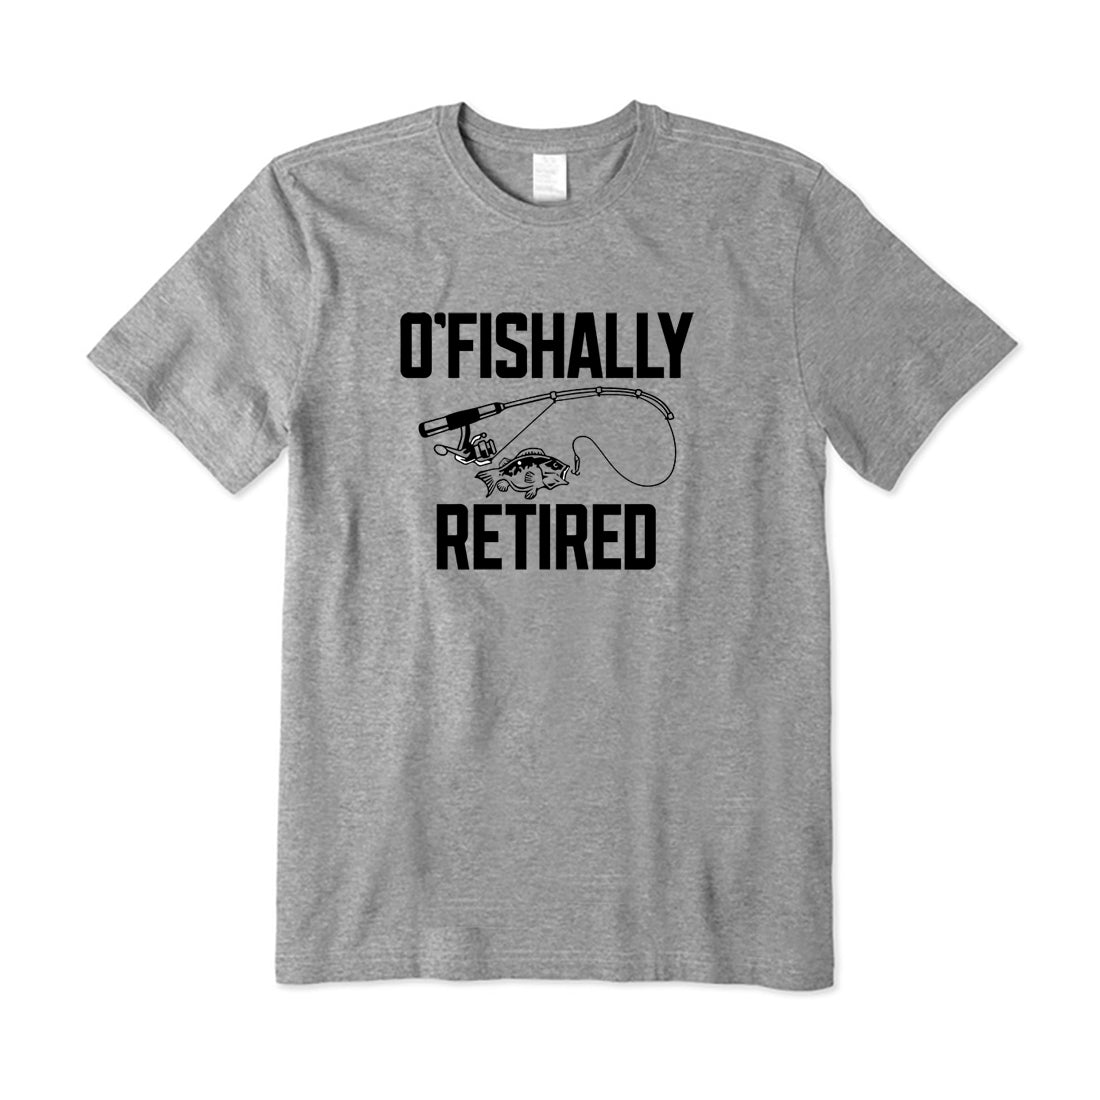 O'fishally Retired T-Shirt